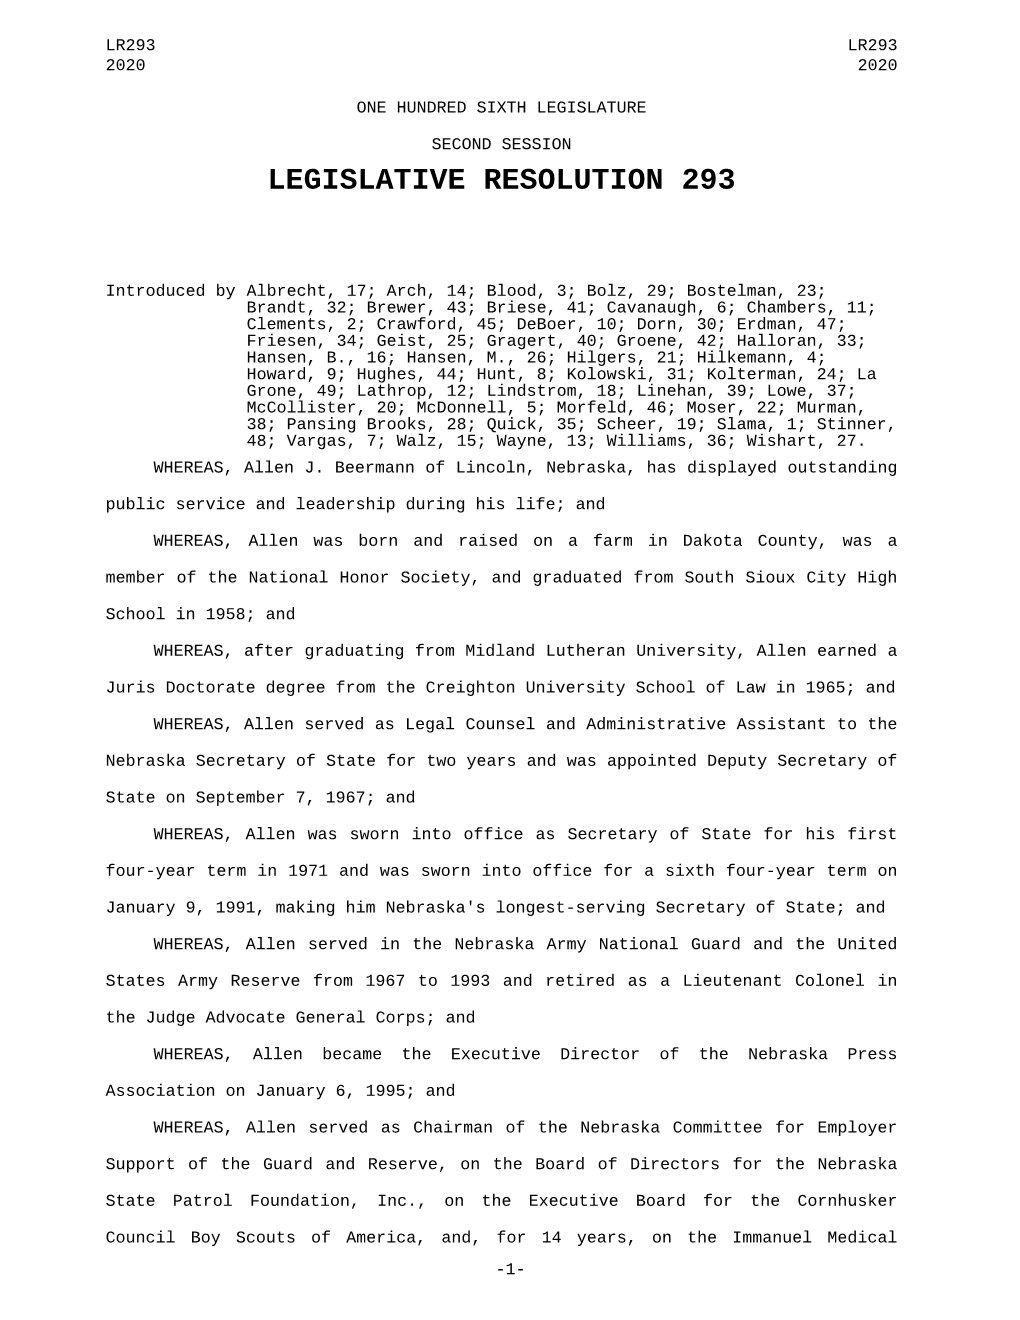 Legislative Resolution 293